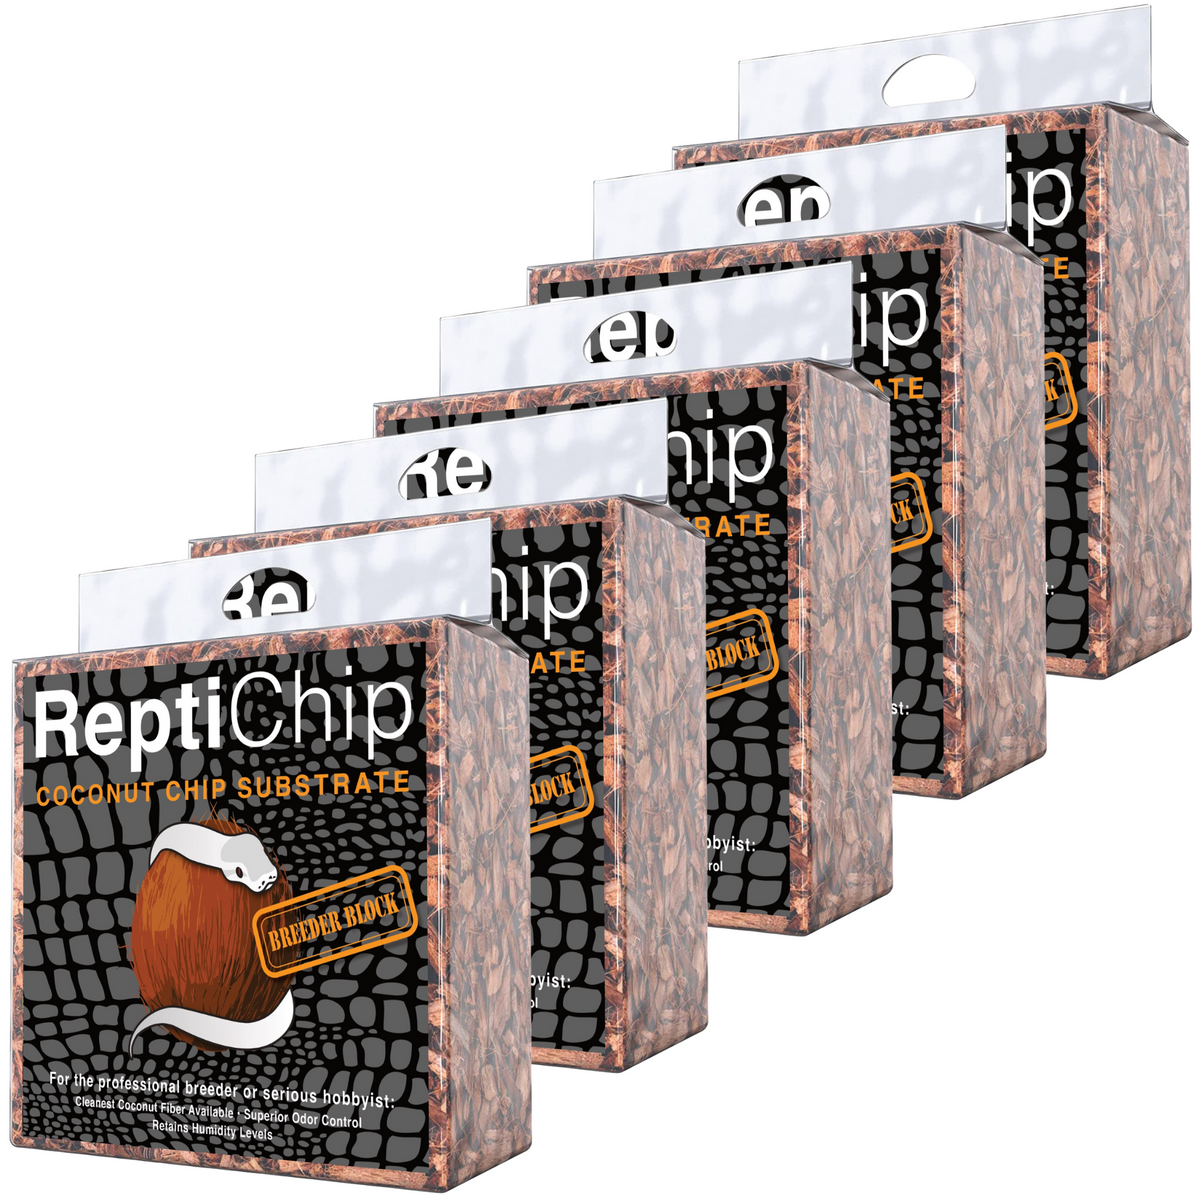 ReptiChip Breeder Blocks and Bundles; Just Add Water (CAN)